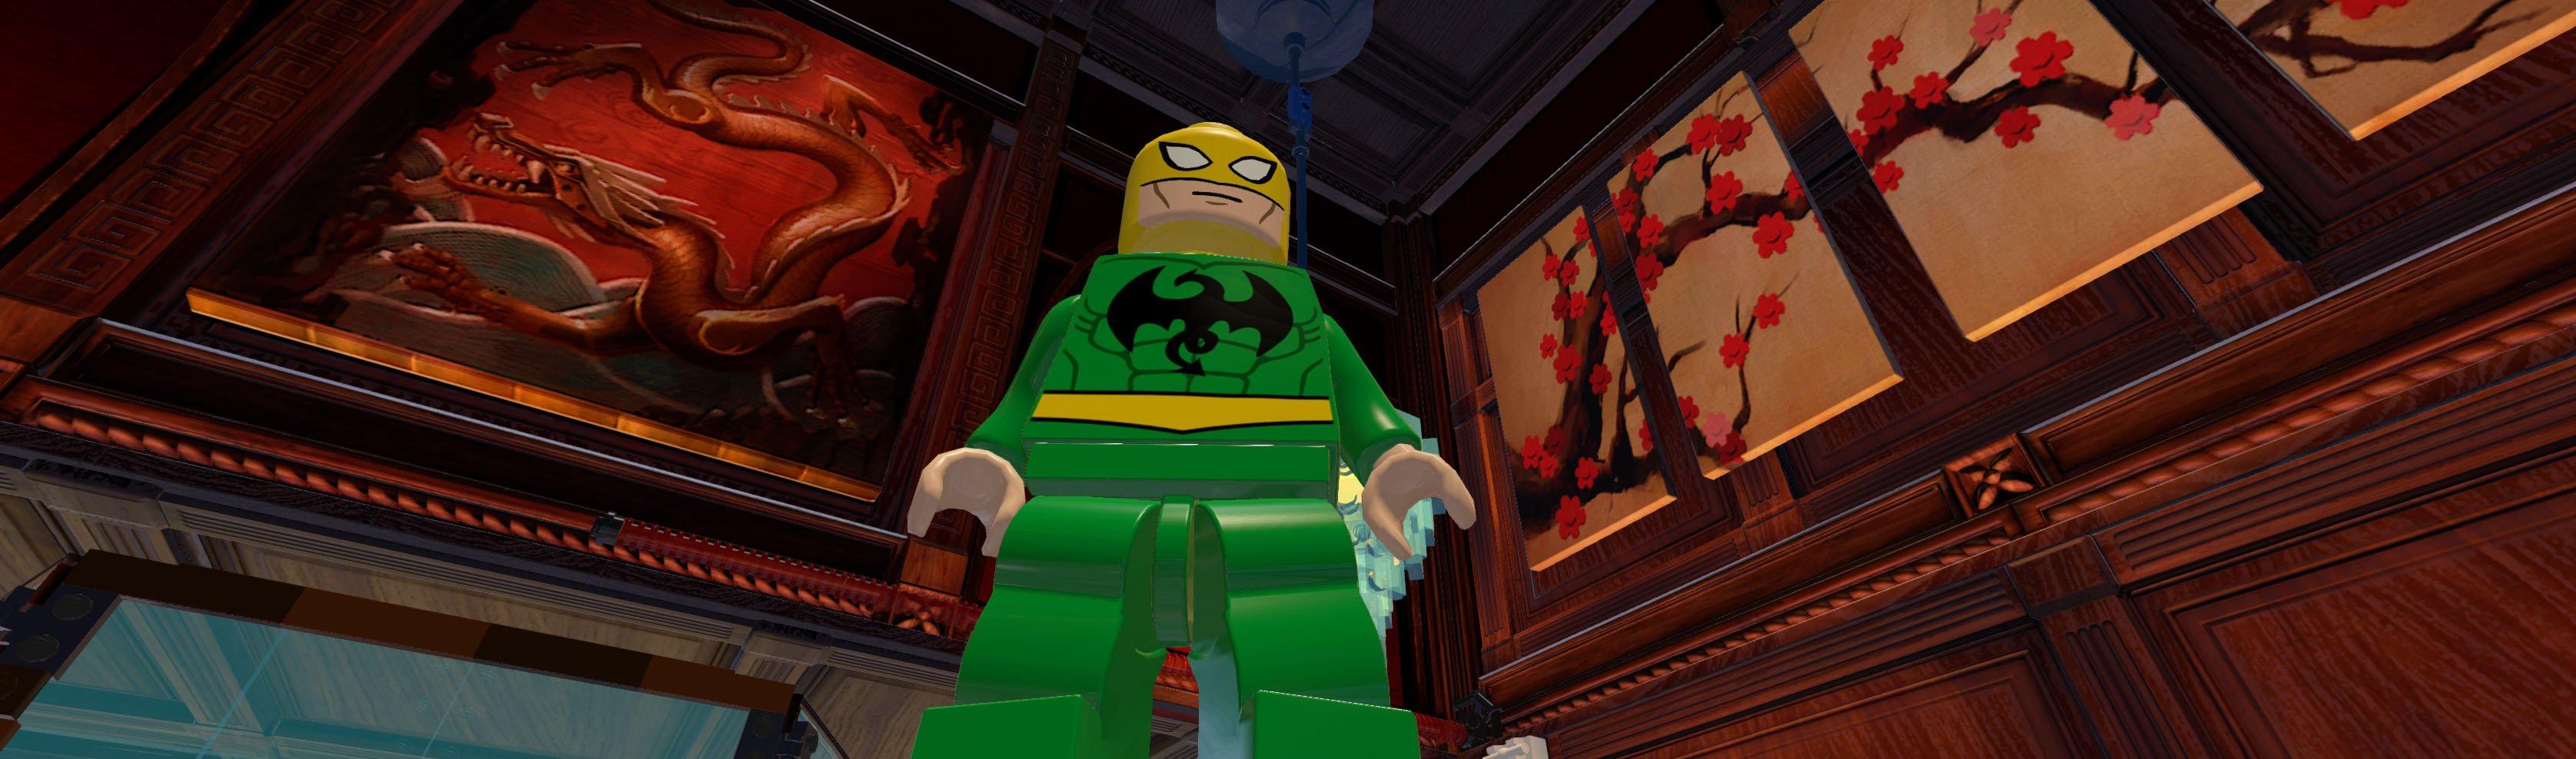 Lego Marvel Superheroes on PS4!  Lego marvel super heroes, Lego marvel, Marvel  superheroes